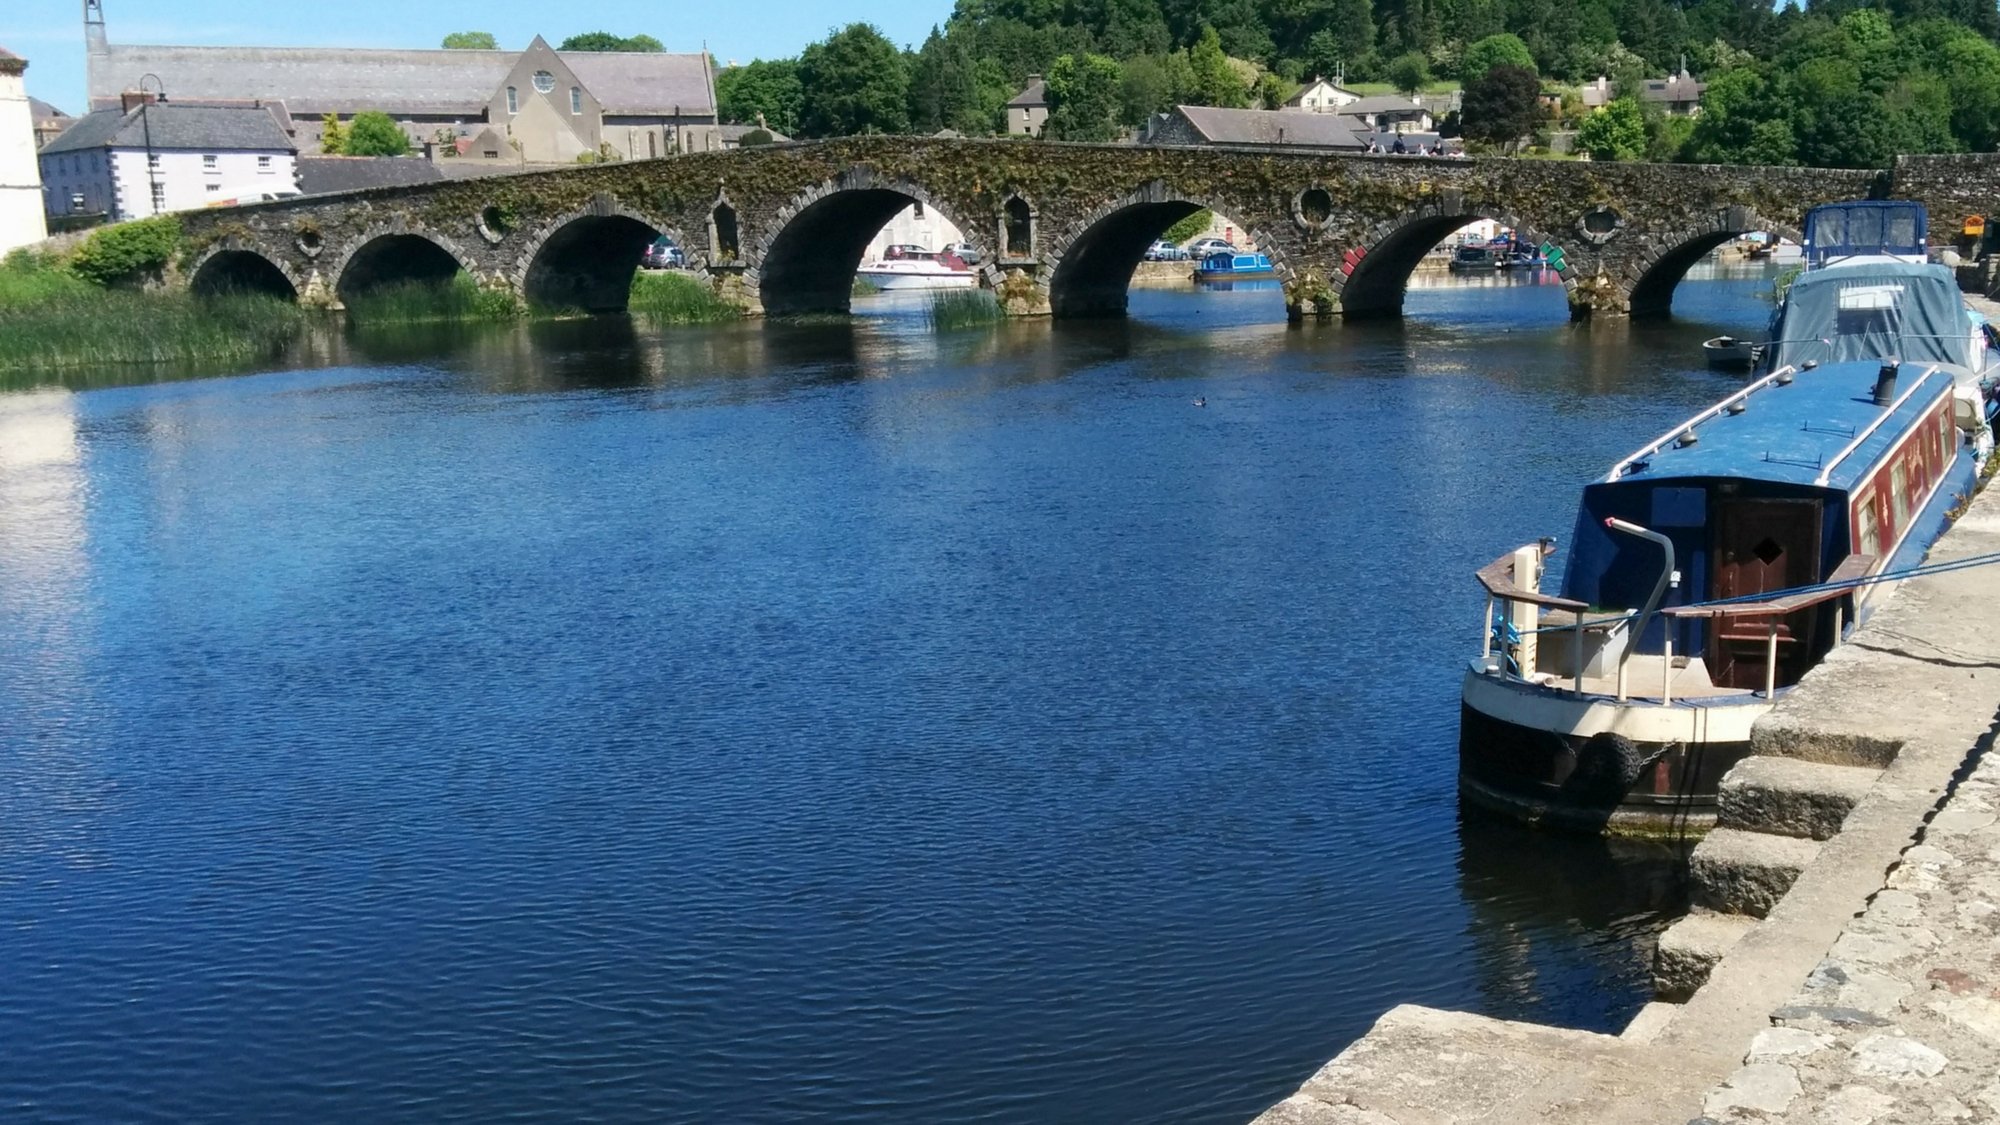 View of the River Barrow and Graiguenamanagh Bridge